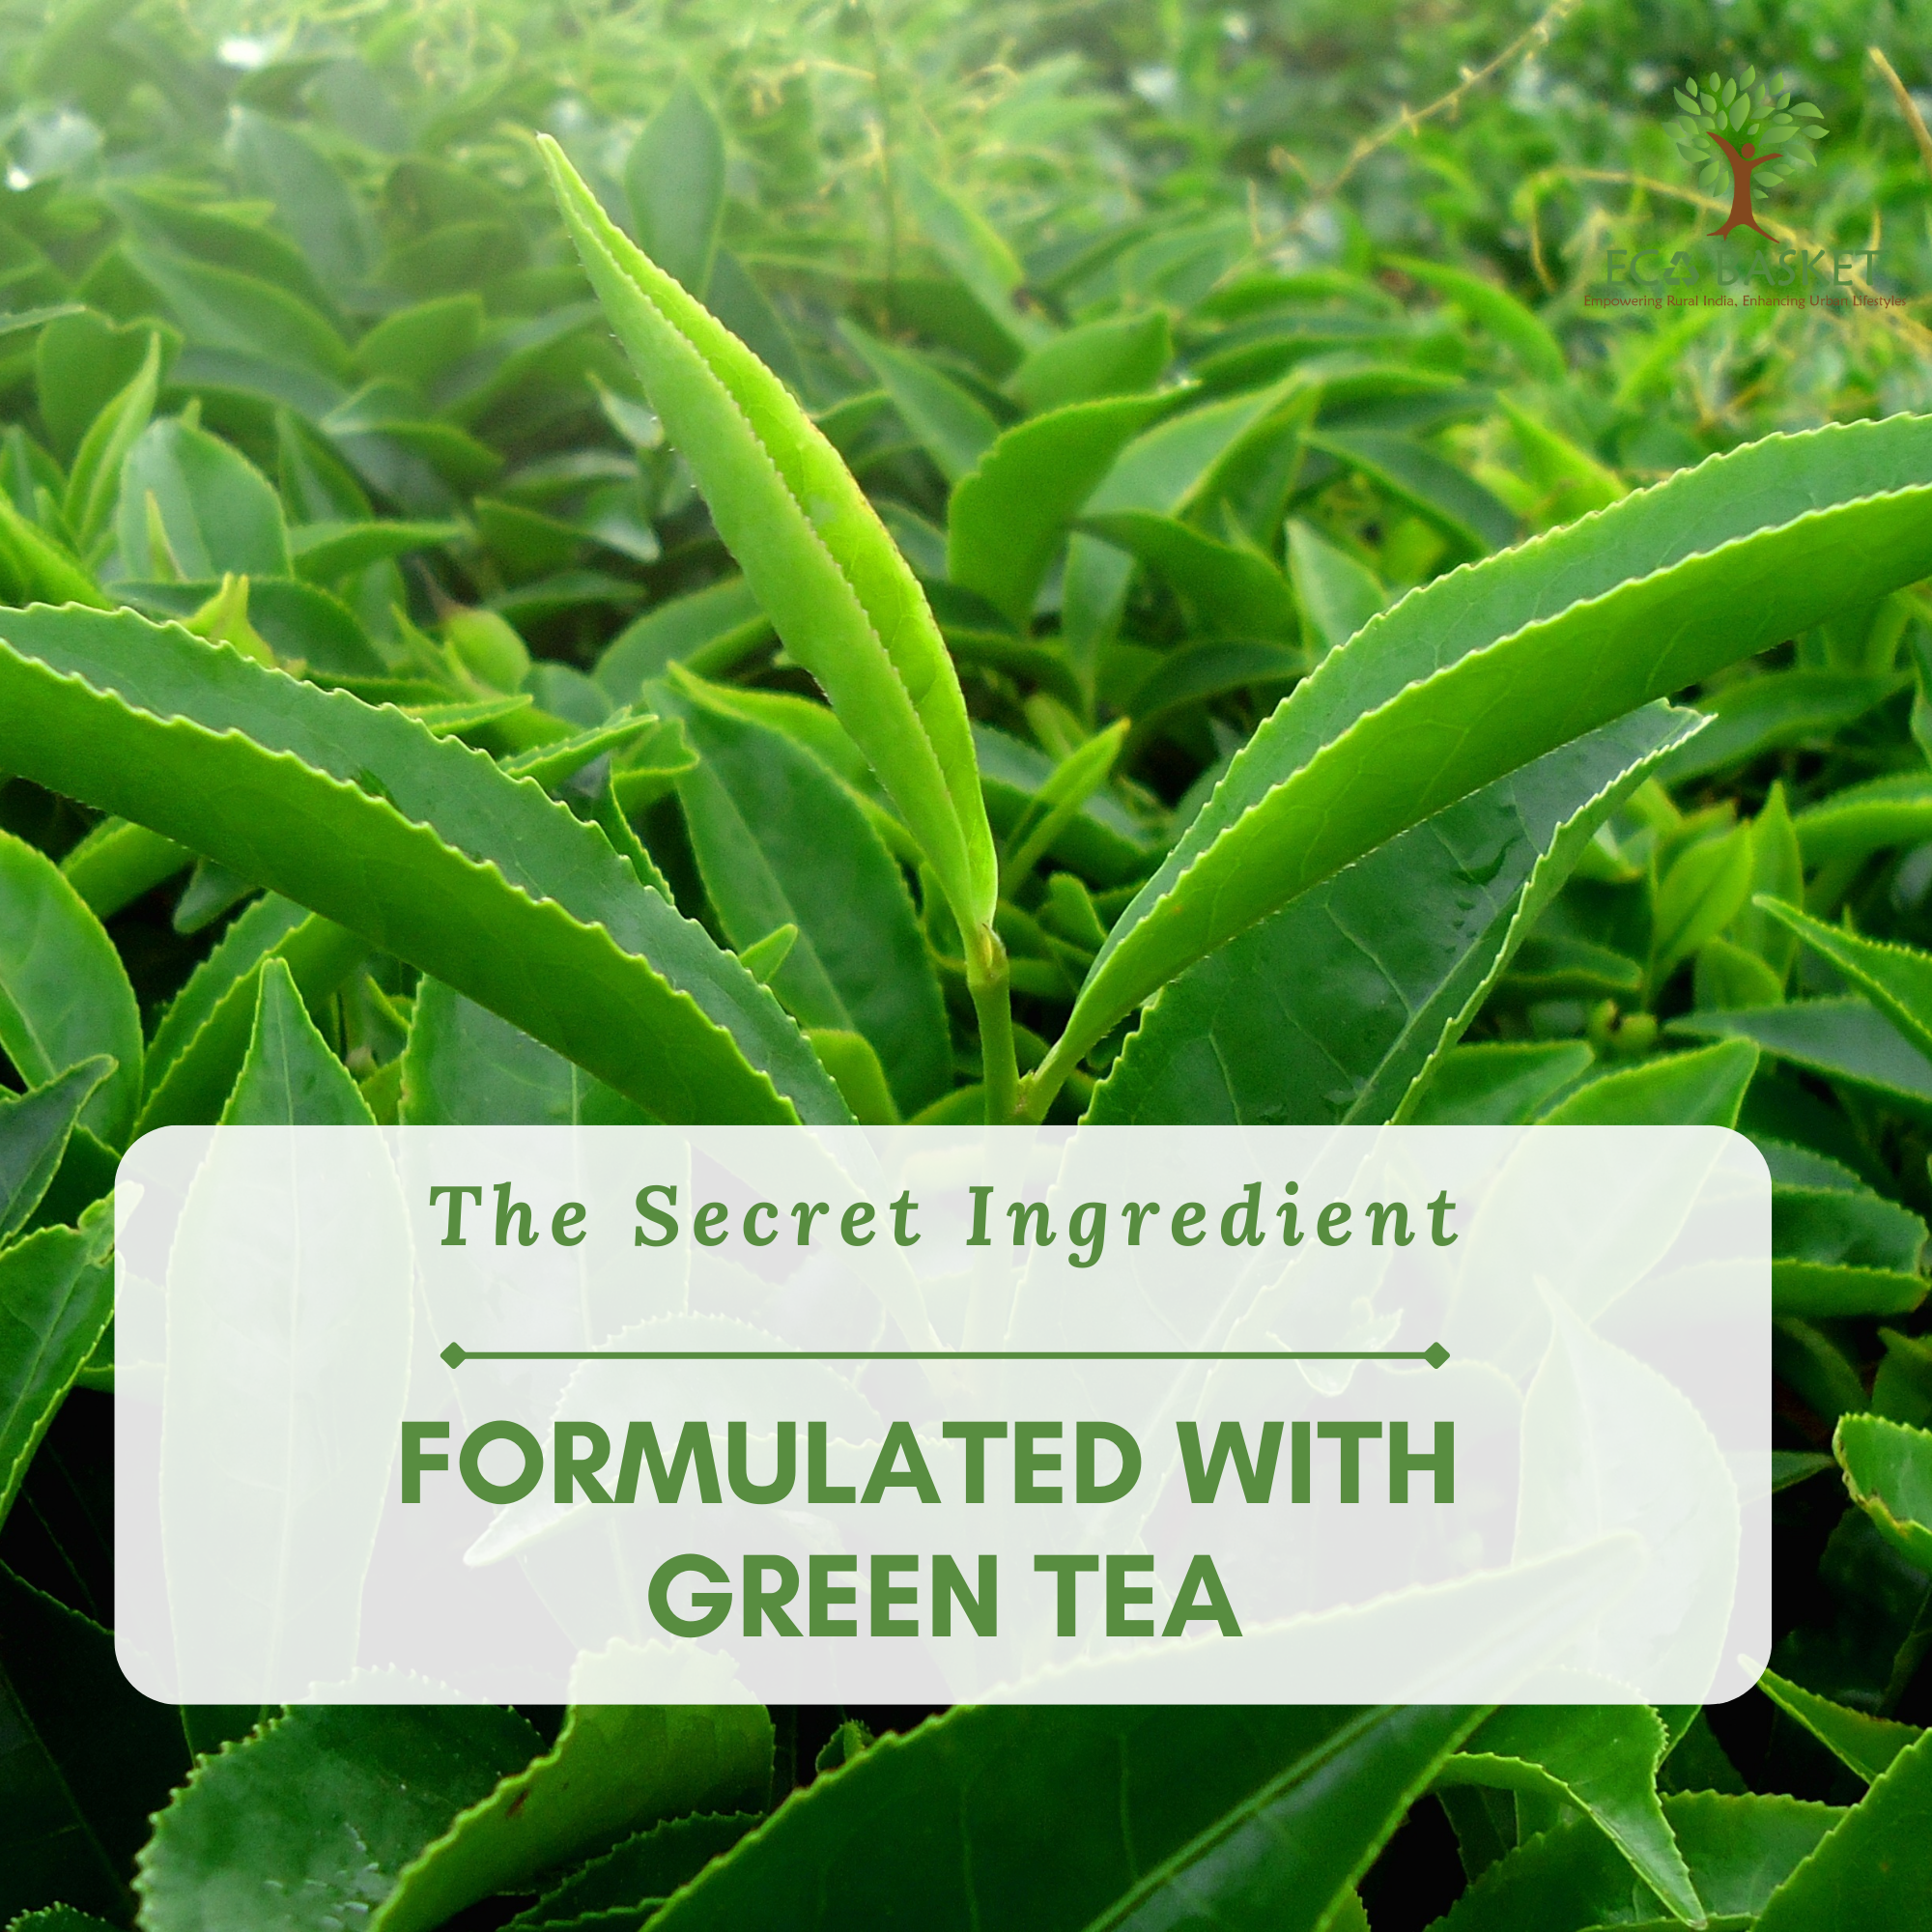 Herbal Green Tea Hand Made Soap